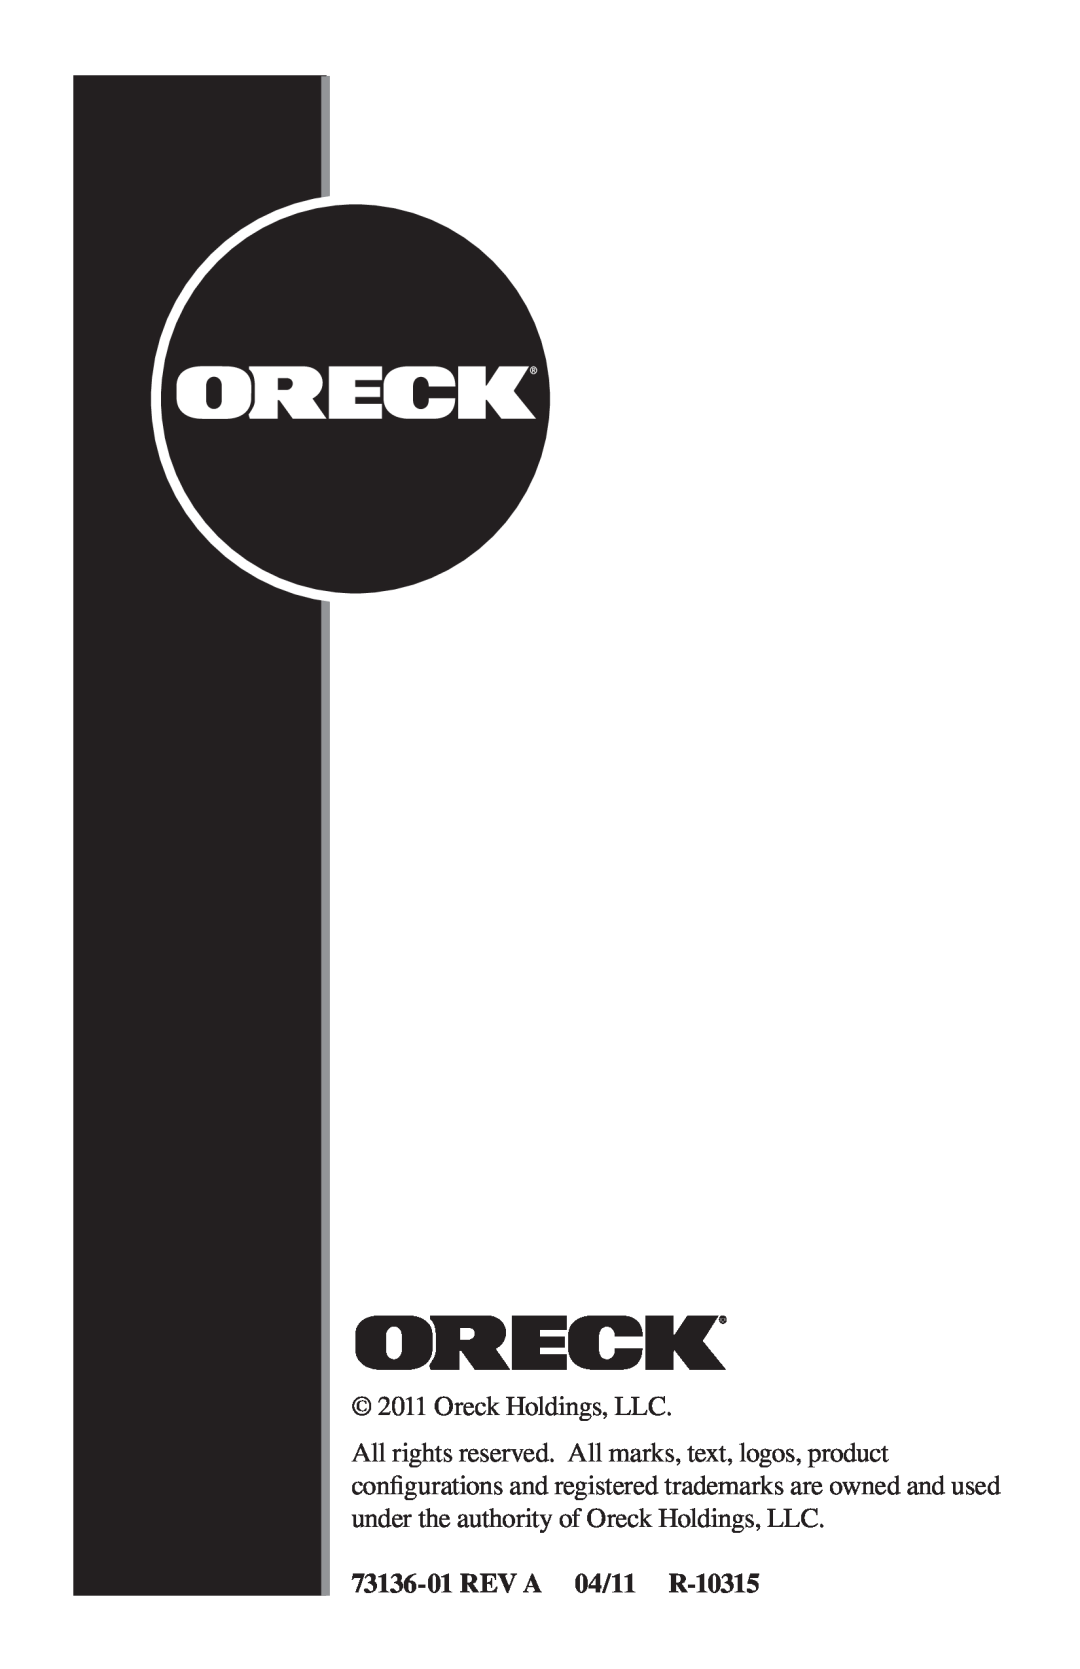 Oreck 1600 manual Oreck Holdings, LLC, REV A 04/11 R-10315 